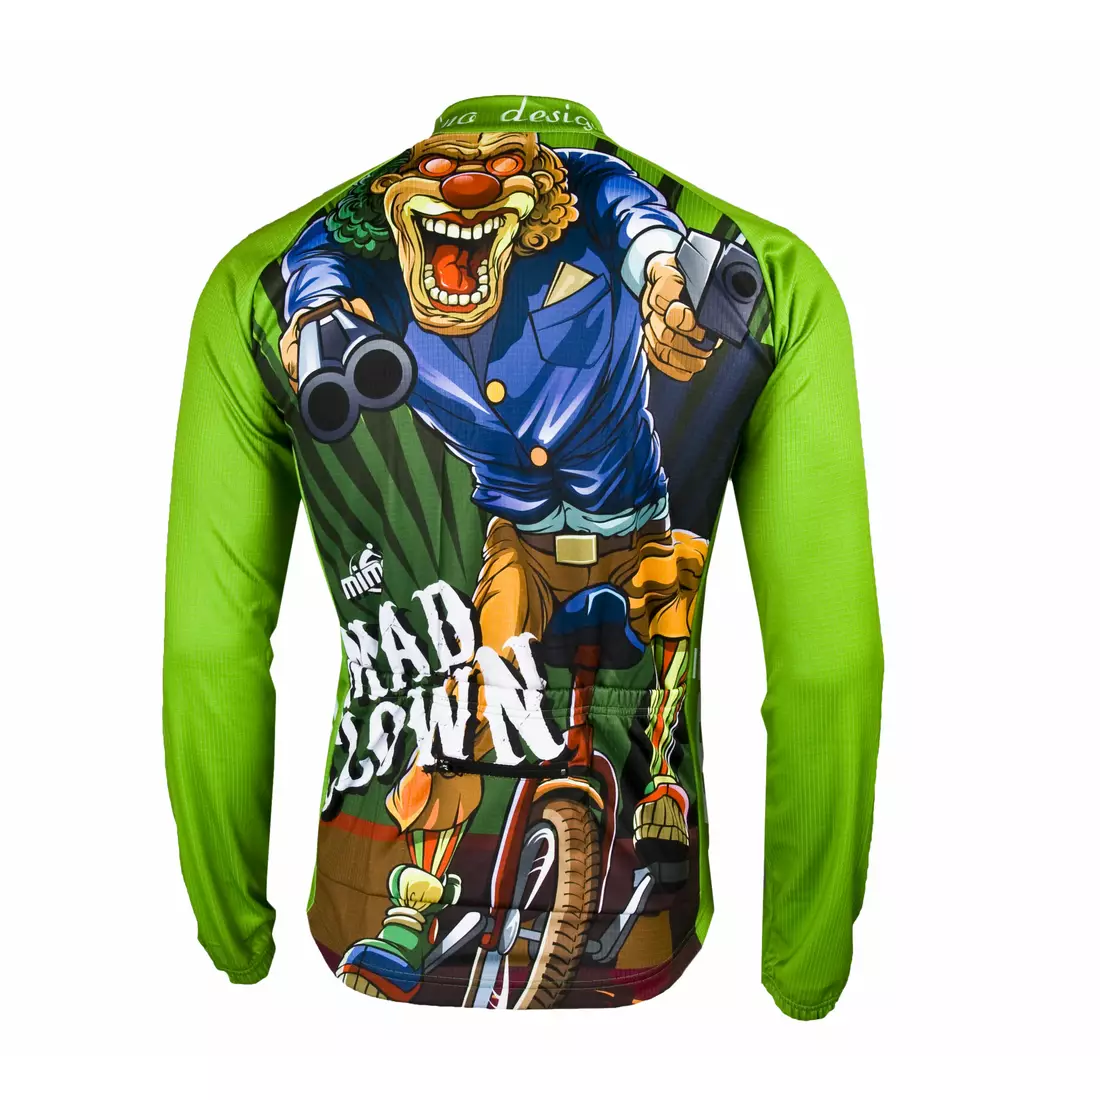 MikeSPORT DESIGN MAD CLOWN men's cycling sweatshirt